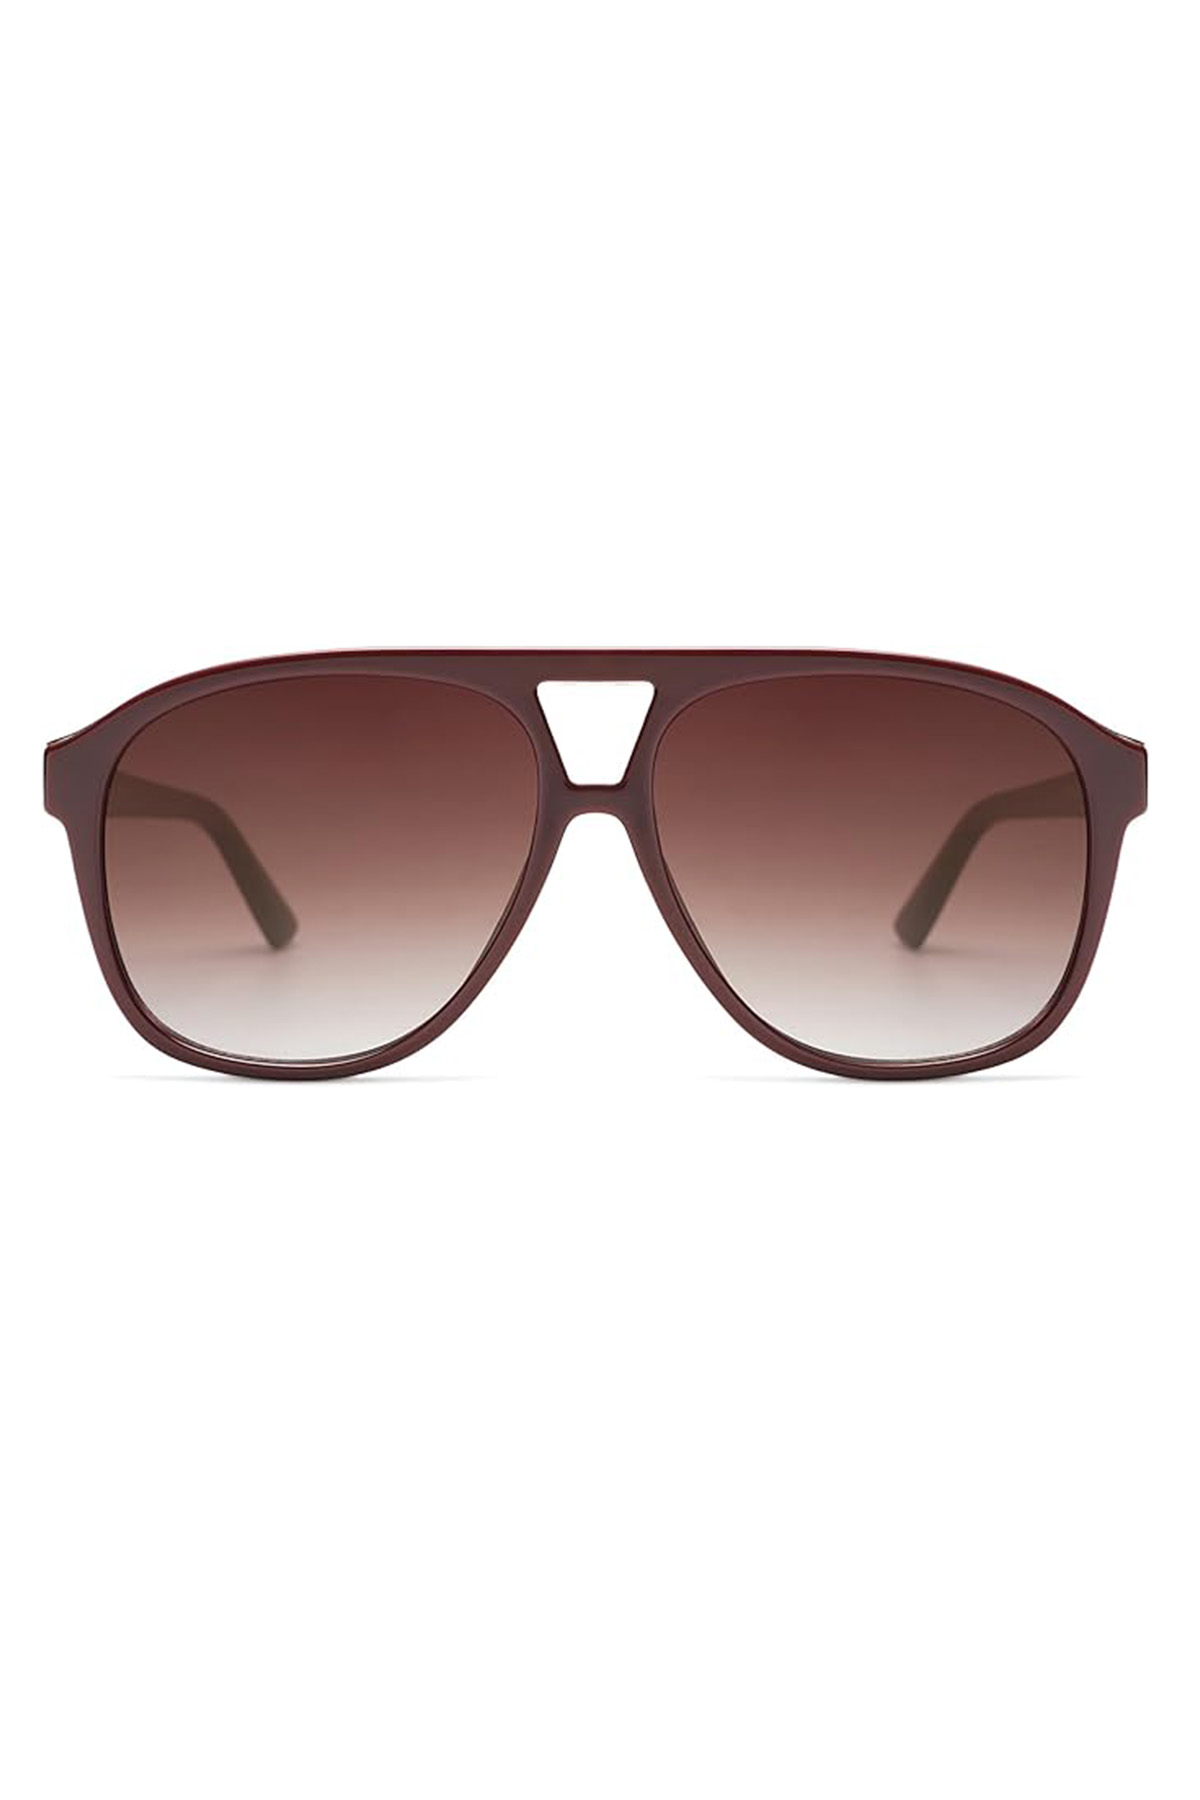 Sojos Retro Trendy Aviator Sunglasses for Women Men Classic Vintage Uv400 Aviators Sj2315, Red/redish Brown